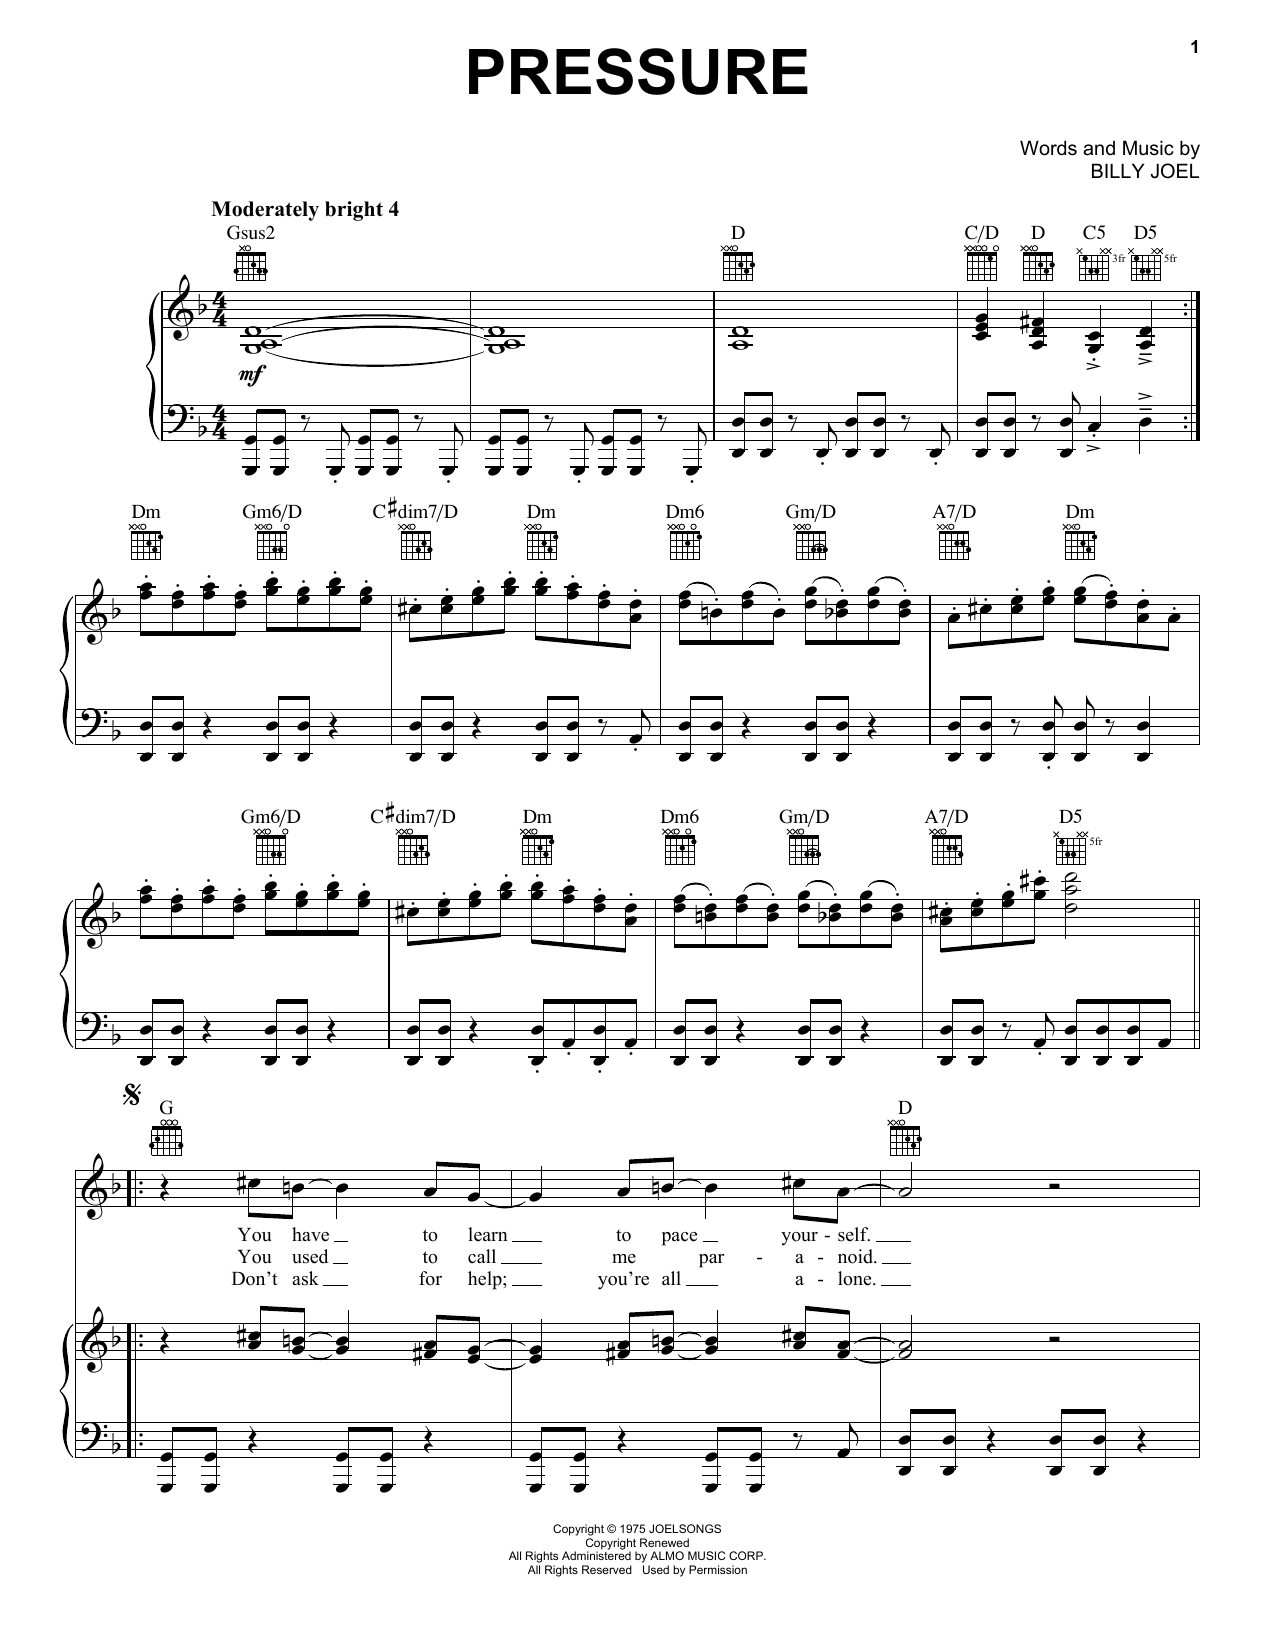 Billy Joel Pressure Sheet Music Notes & Chords for Melody Line, Lyrics & Chords - Download or Print PDF